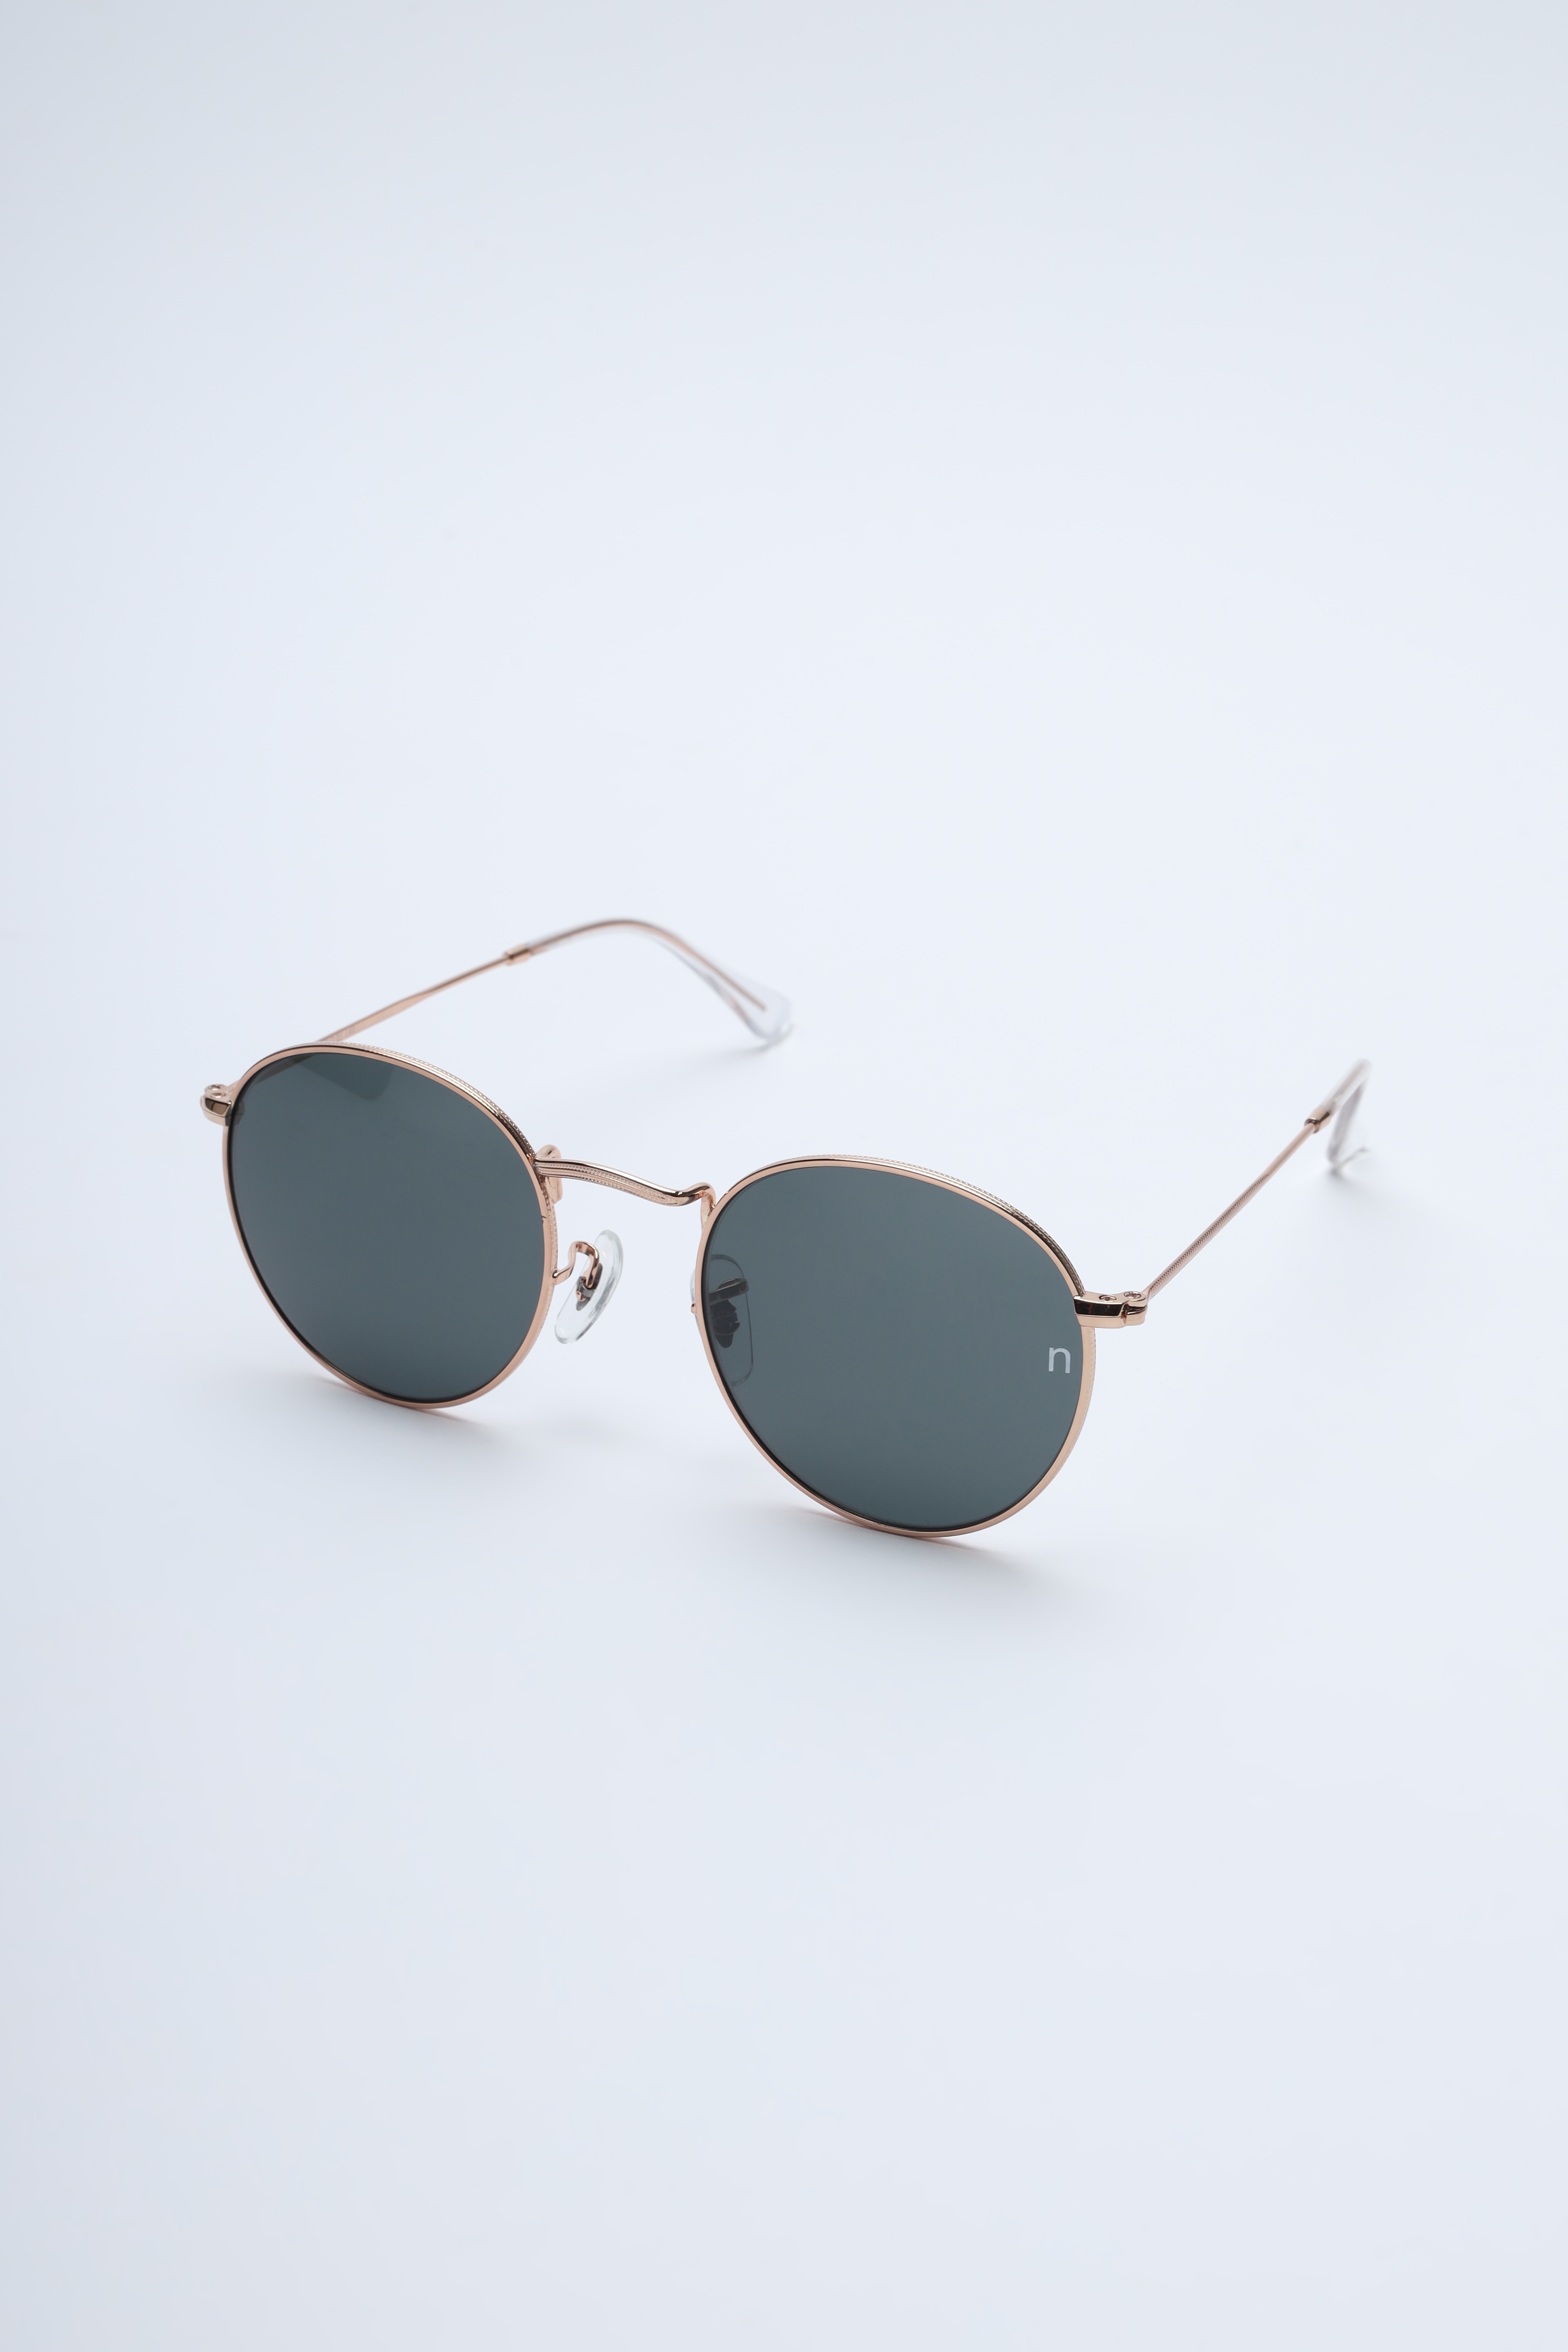 Noggah | Noggah Stainless Steel Gold Frame with Black Glass UV Protection Lens  Medium Size Unisex Sunglasses